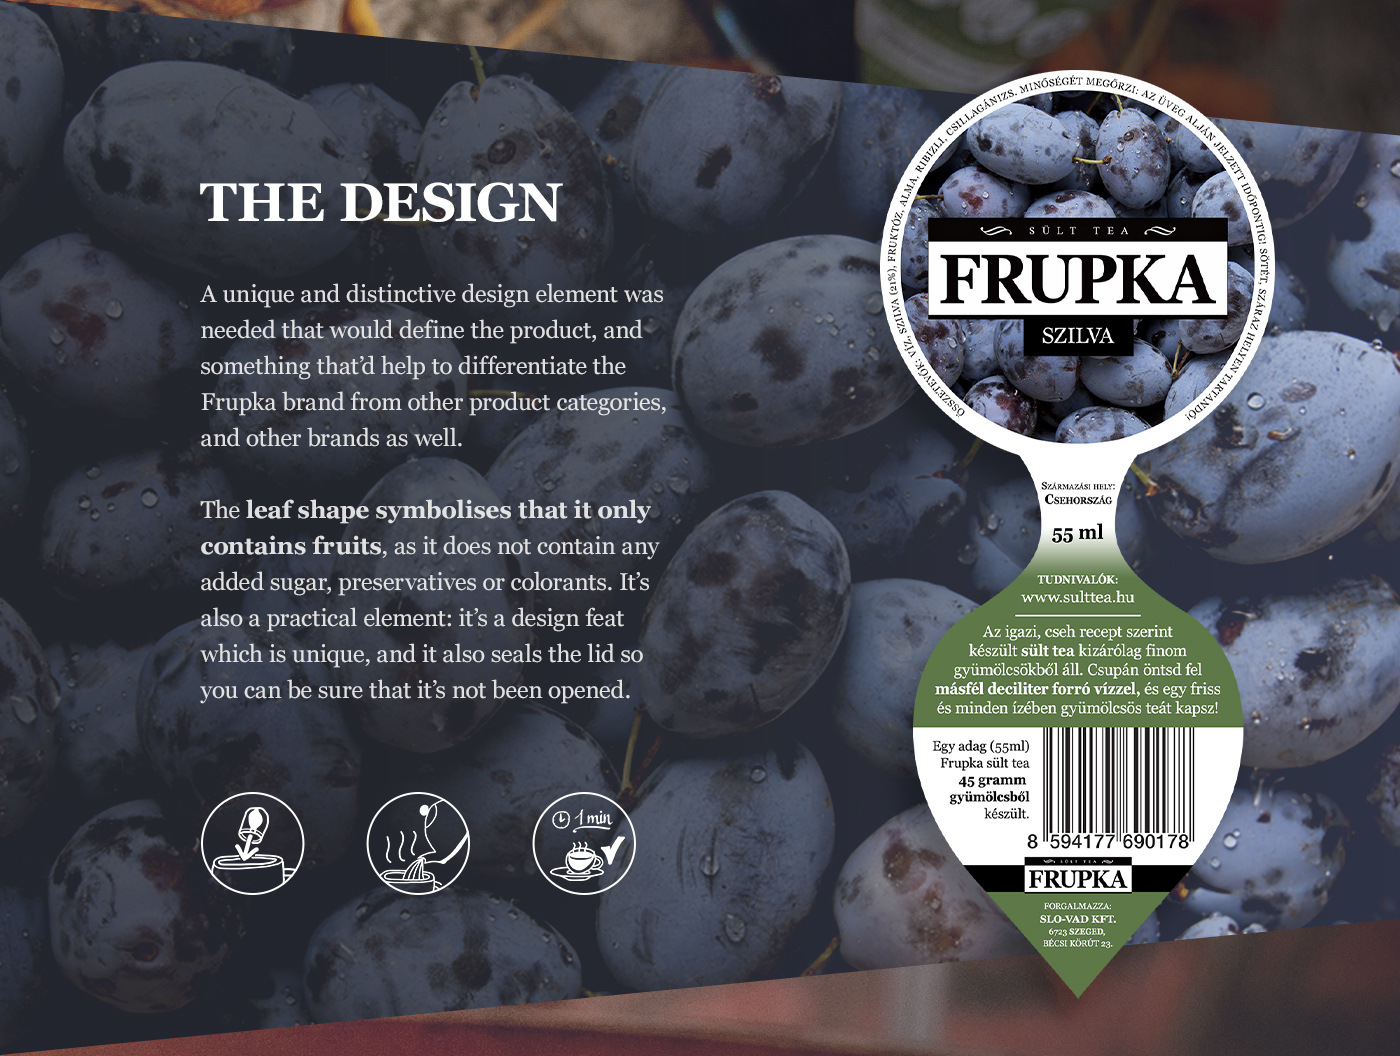 frupka sült tea baked tea tea jar hungary design label design